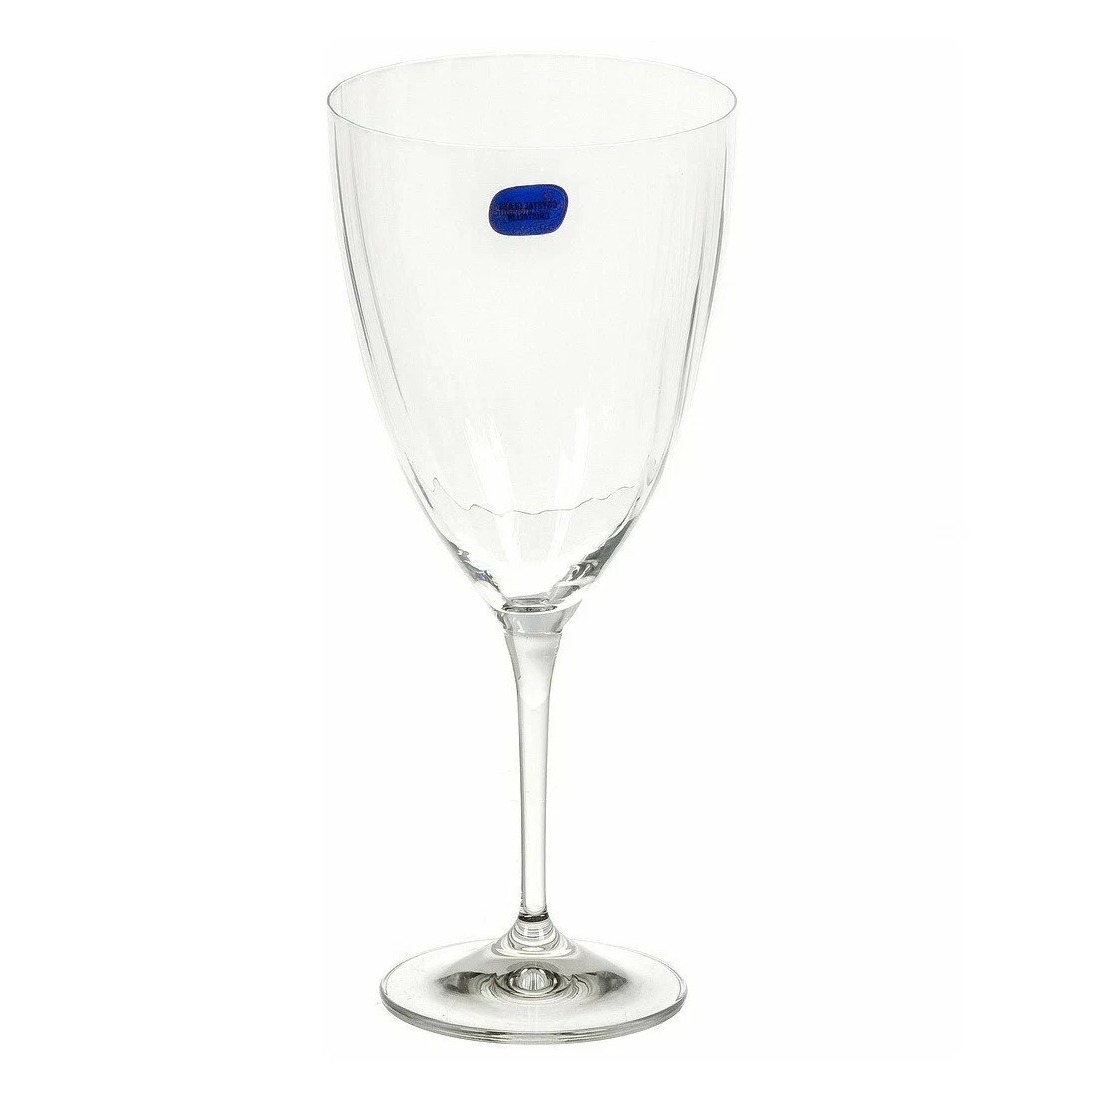 Набор бокалов Crystalex A.S. кейт оптик для вина 500 мл 6 шт набор бокалов crystalex a s кейт оптик для вина 500 мл 6 шт